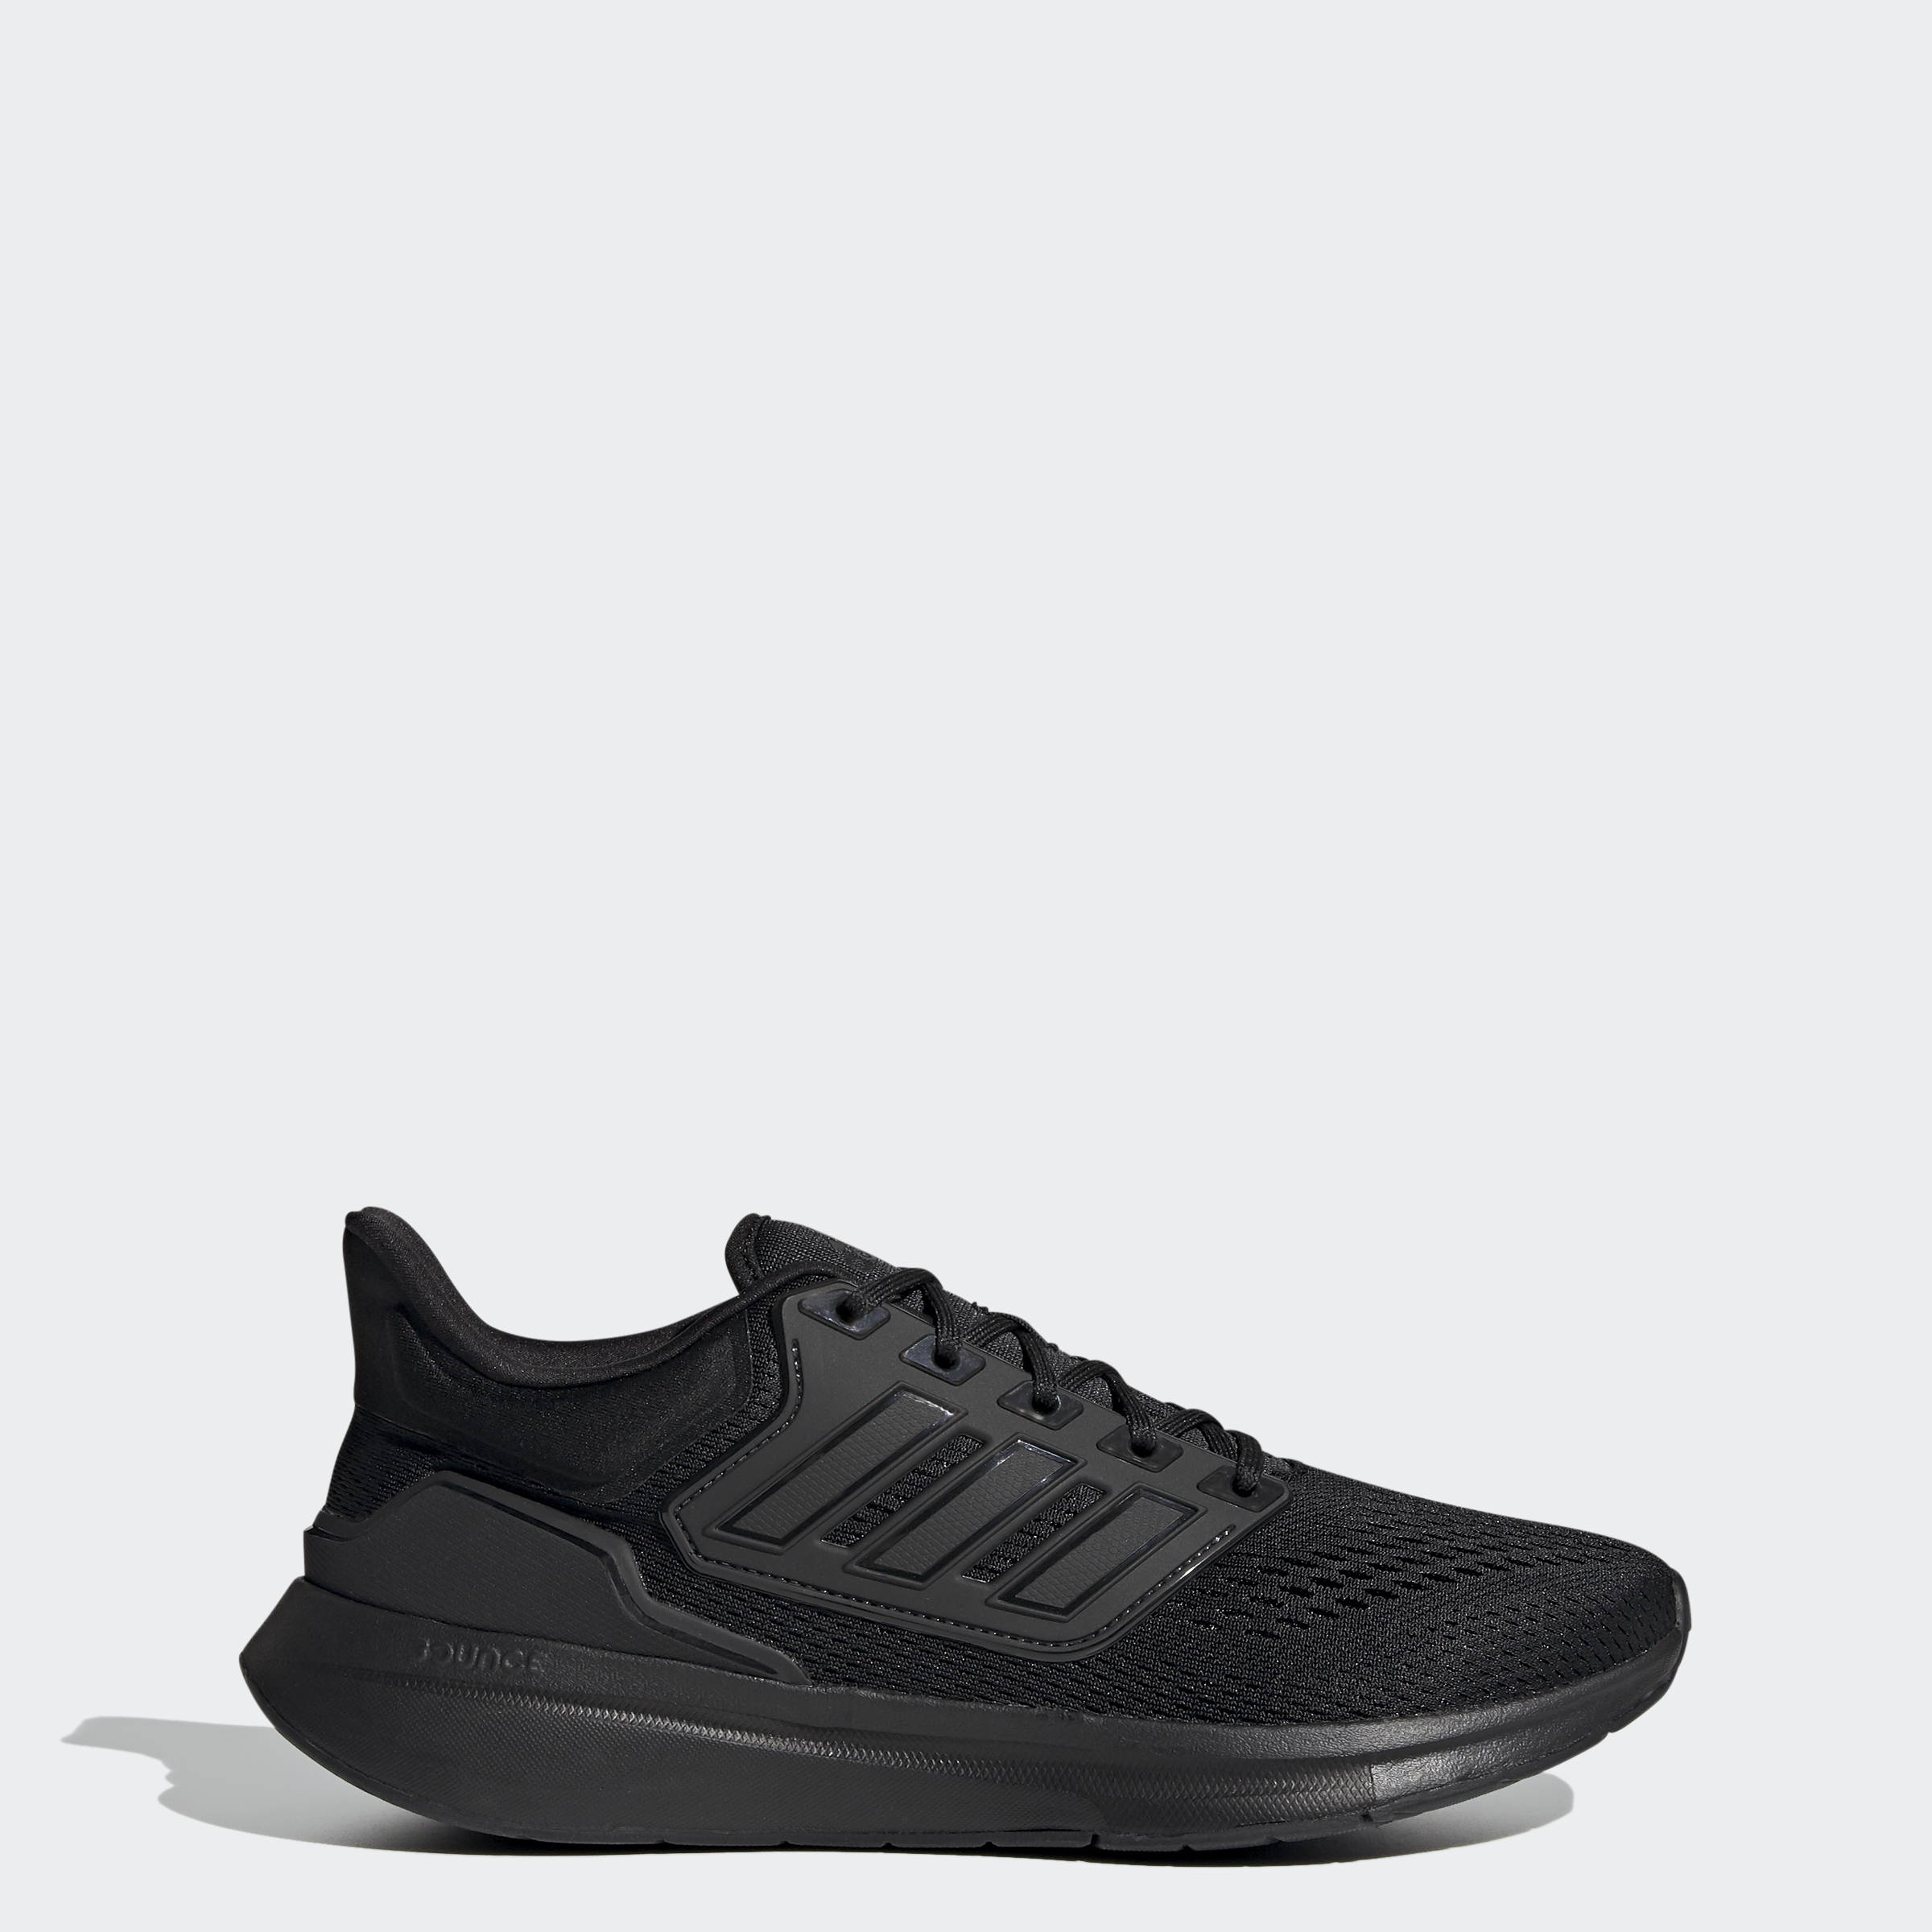 Adidas EQ21 Running Shoes - Men's (Black) or Women's (Magic Mauve) $33.40 at